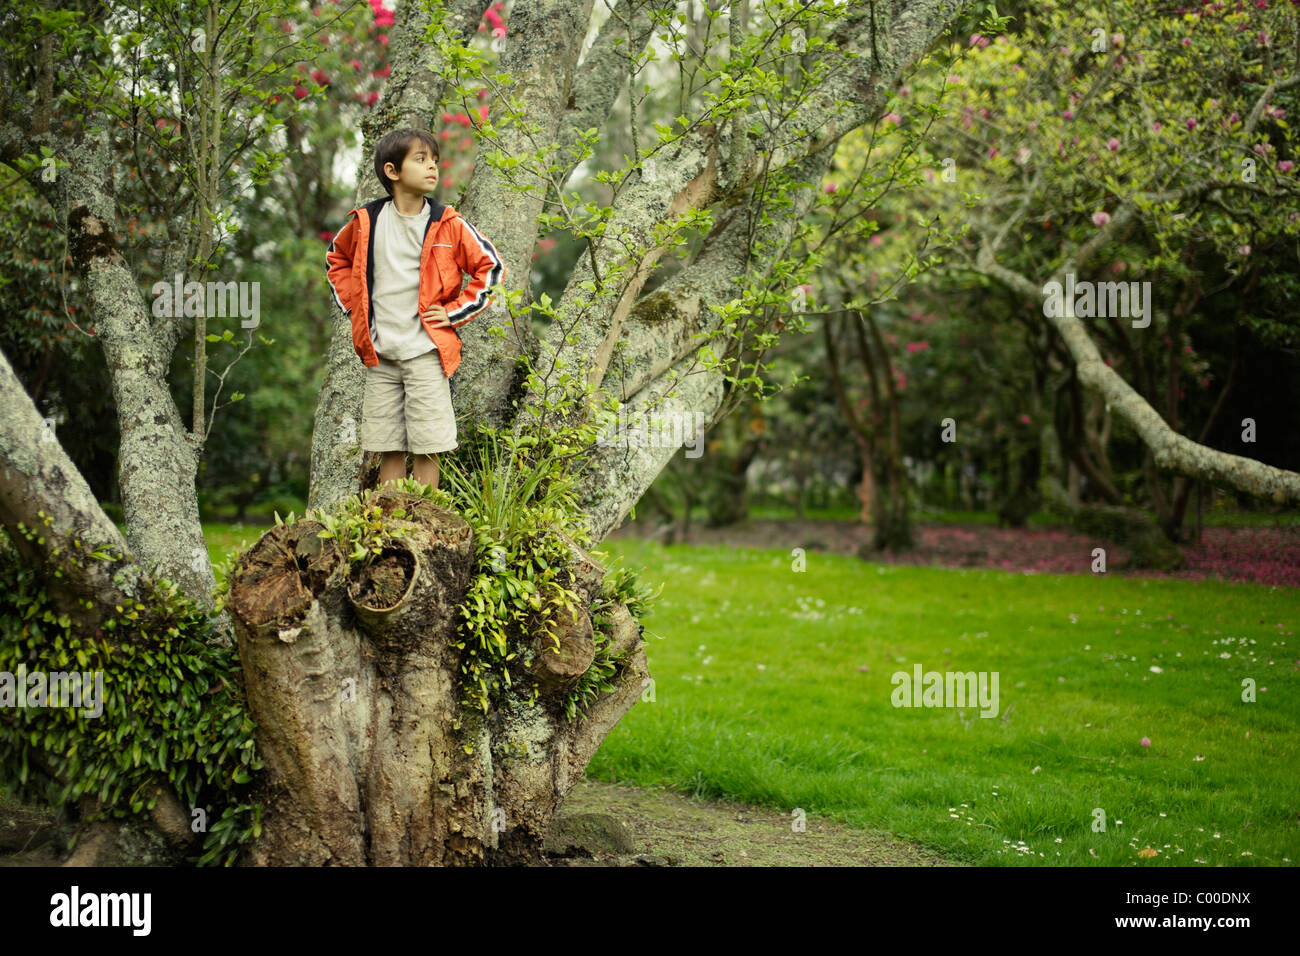 Boy stands on tree stump. Stock Photo